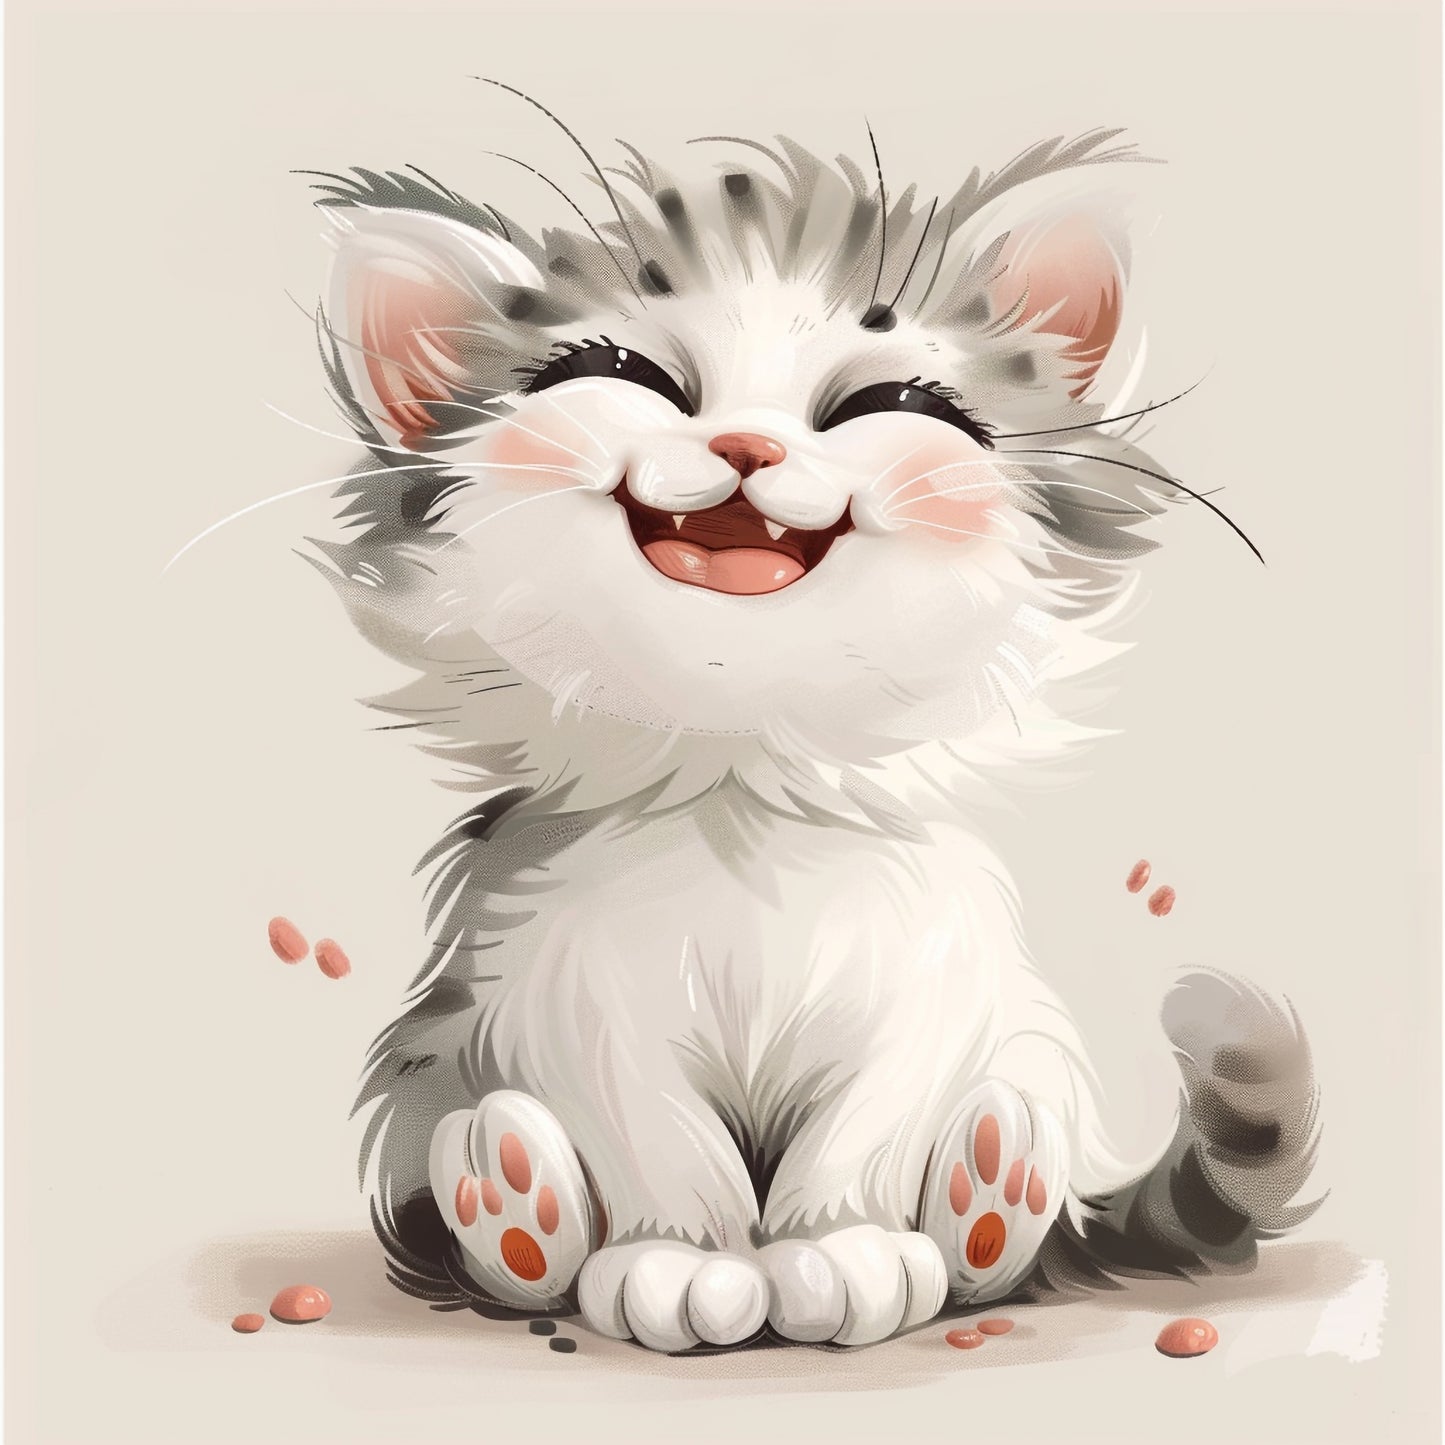 Adorable Smiling Kitten Illustration for Embroidery Design